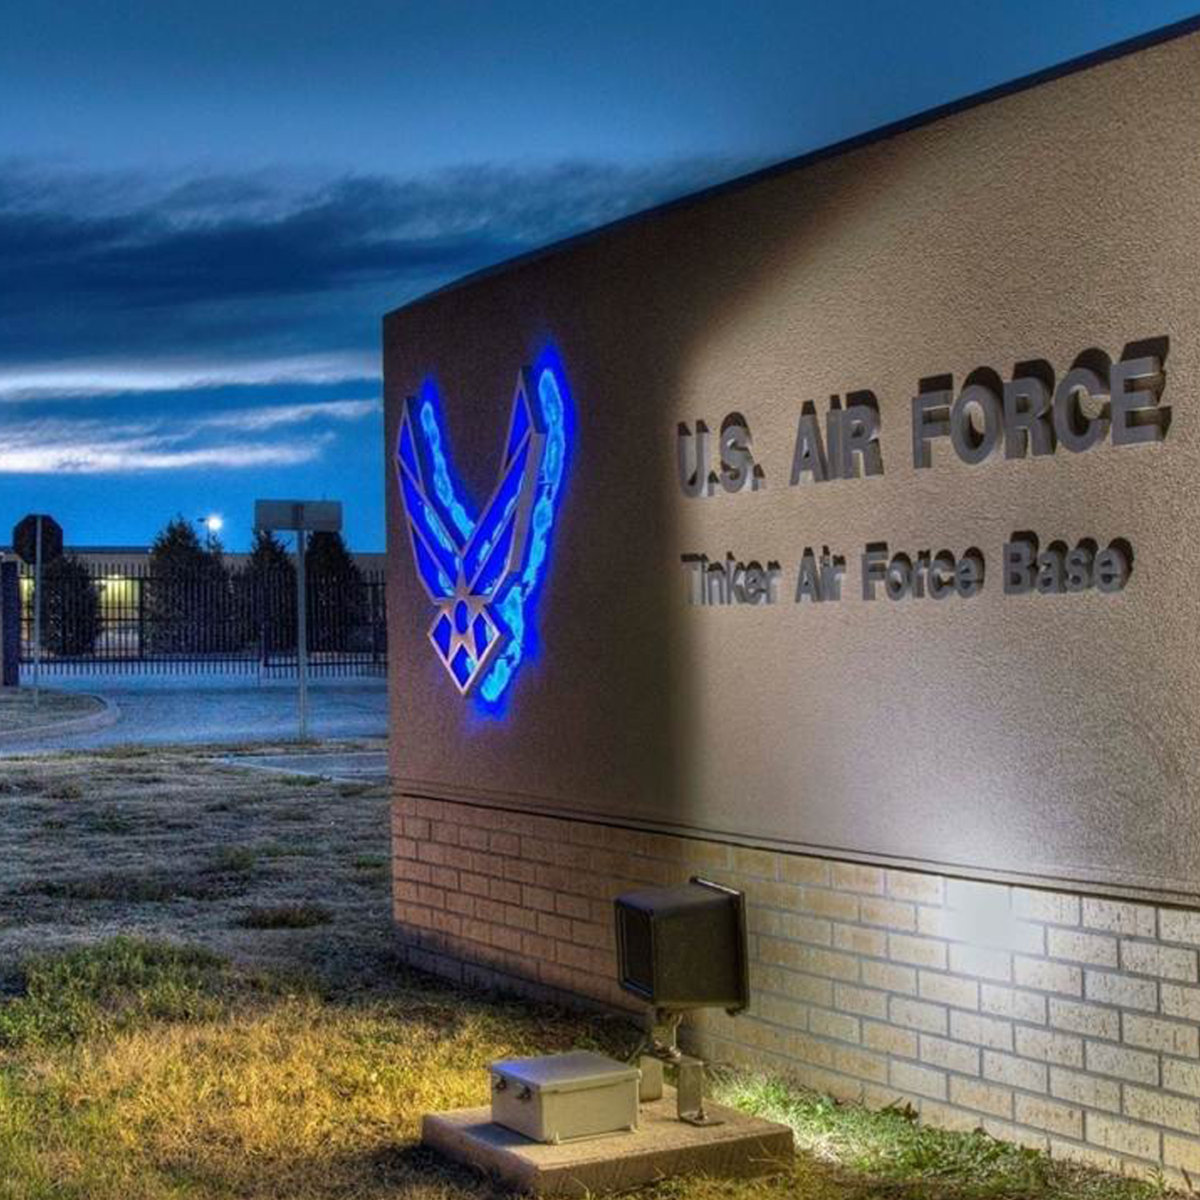 U.S. Air Force Base Welcome Sign